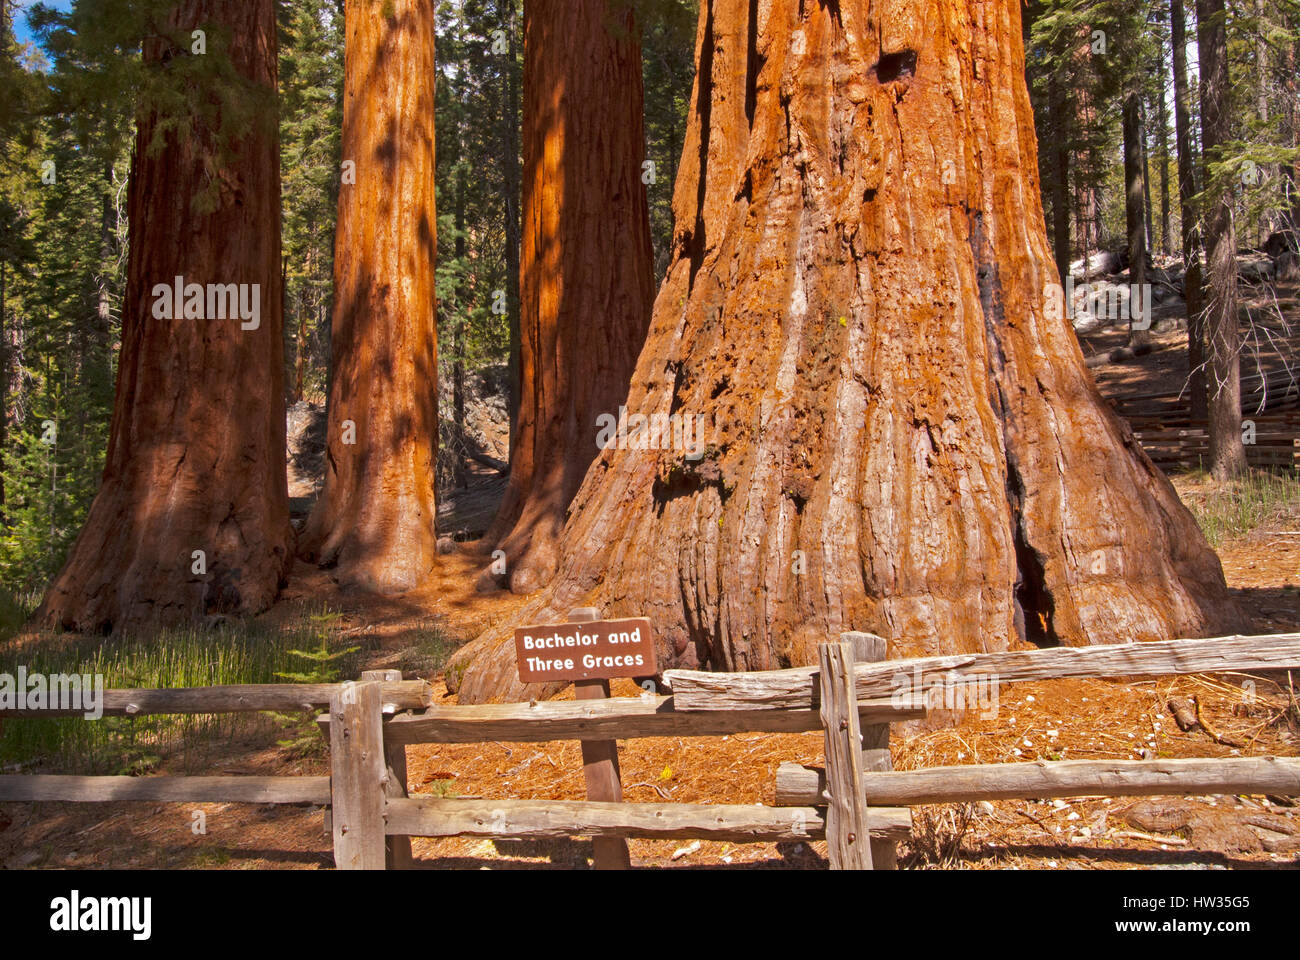 Giant Sequoias (Bachelor and Three Graces), Mariposa Grove, Yosemite National Park, California Stock Photo